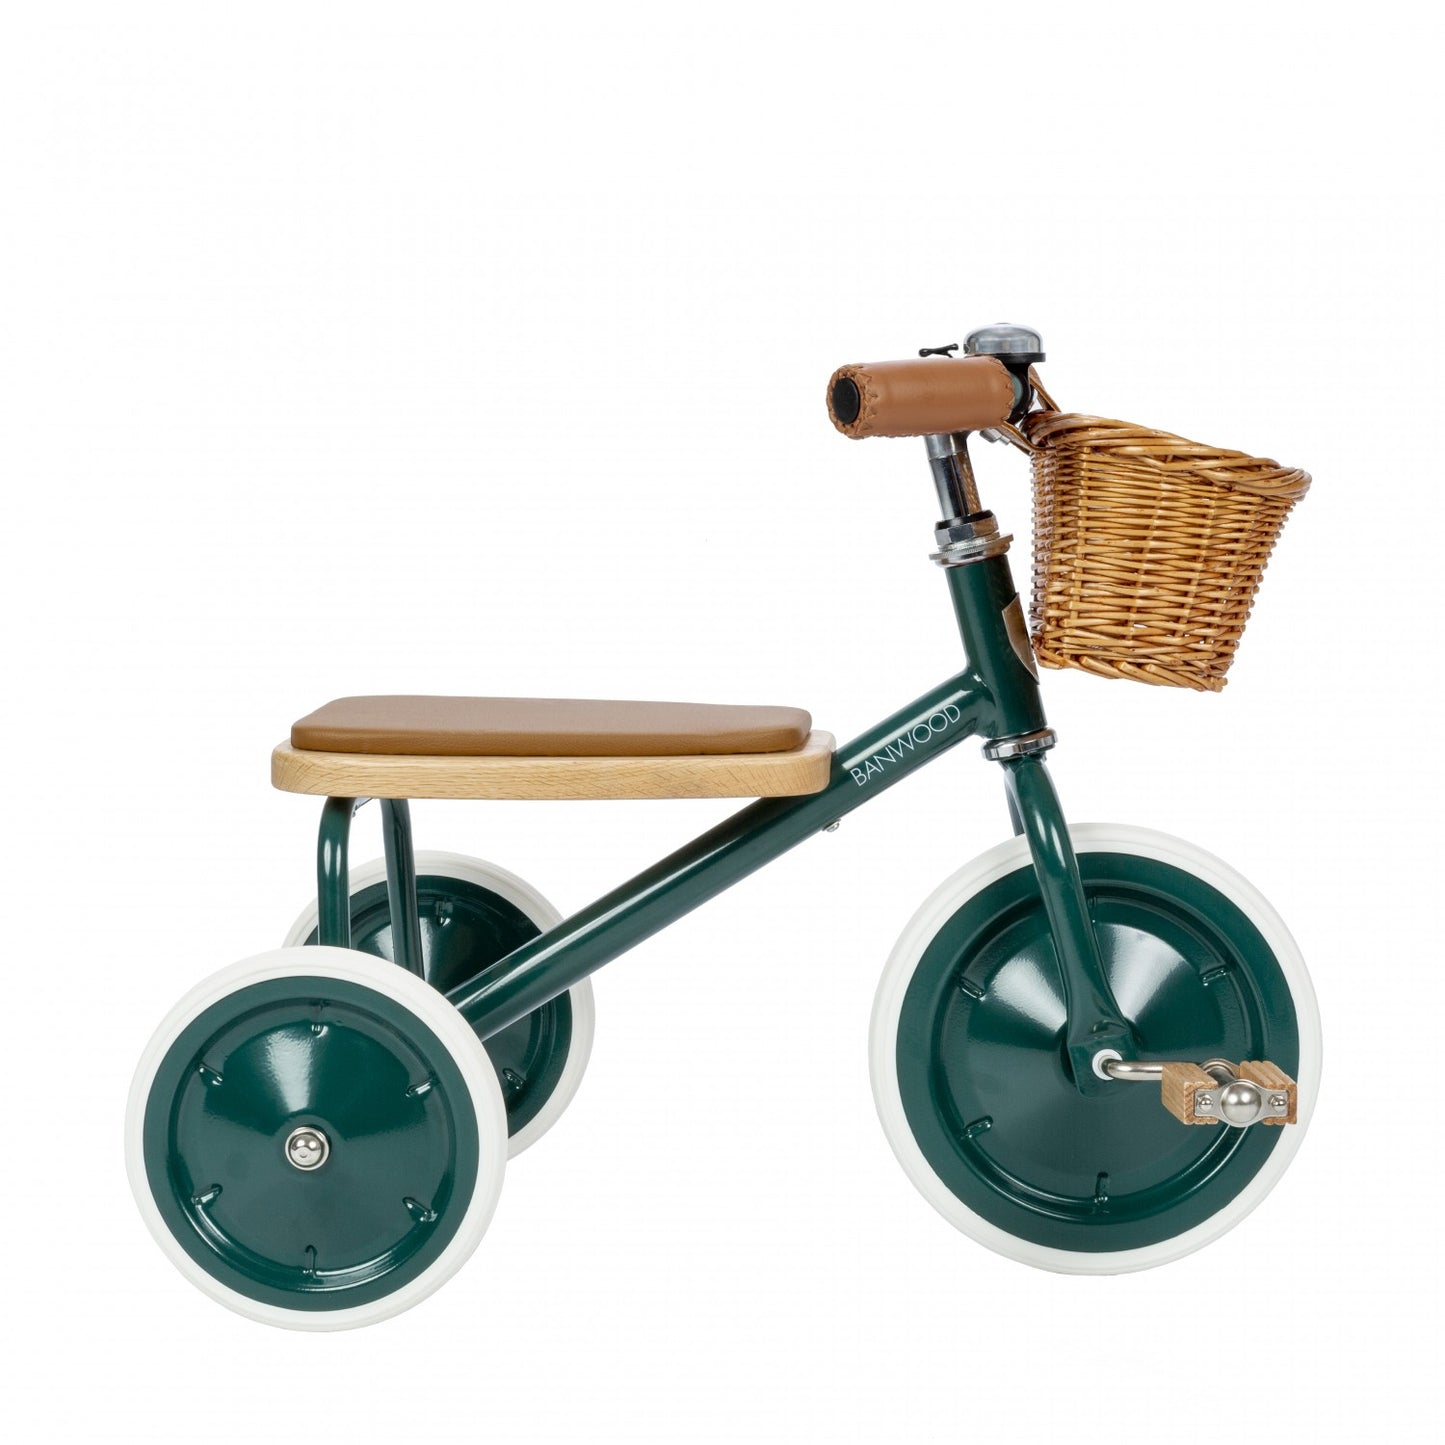 Forest Green Vintage Trike with Basket